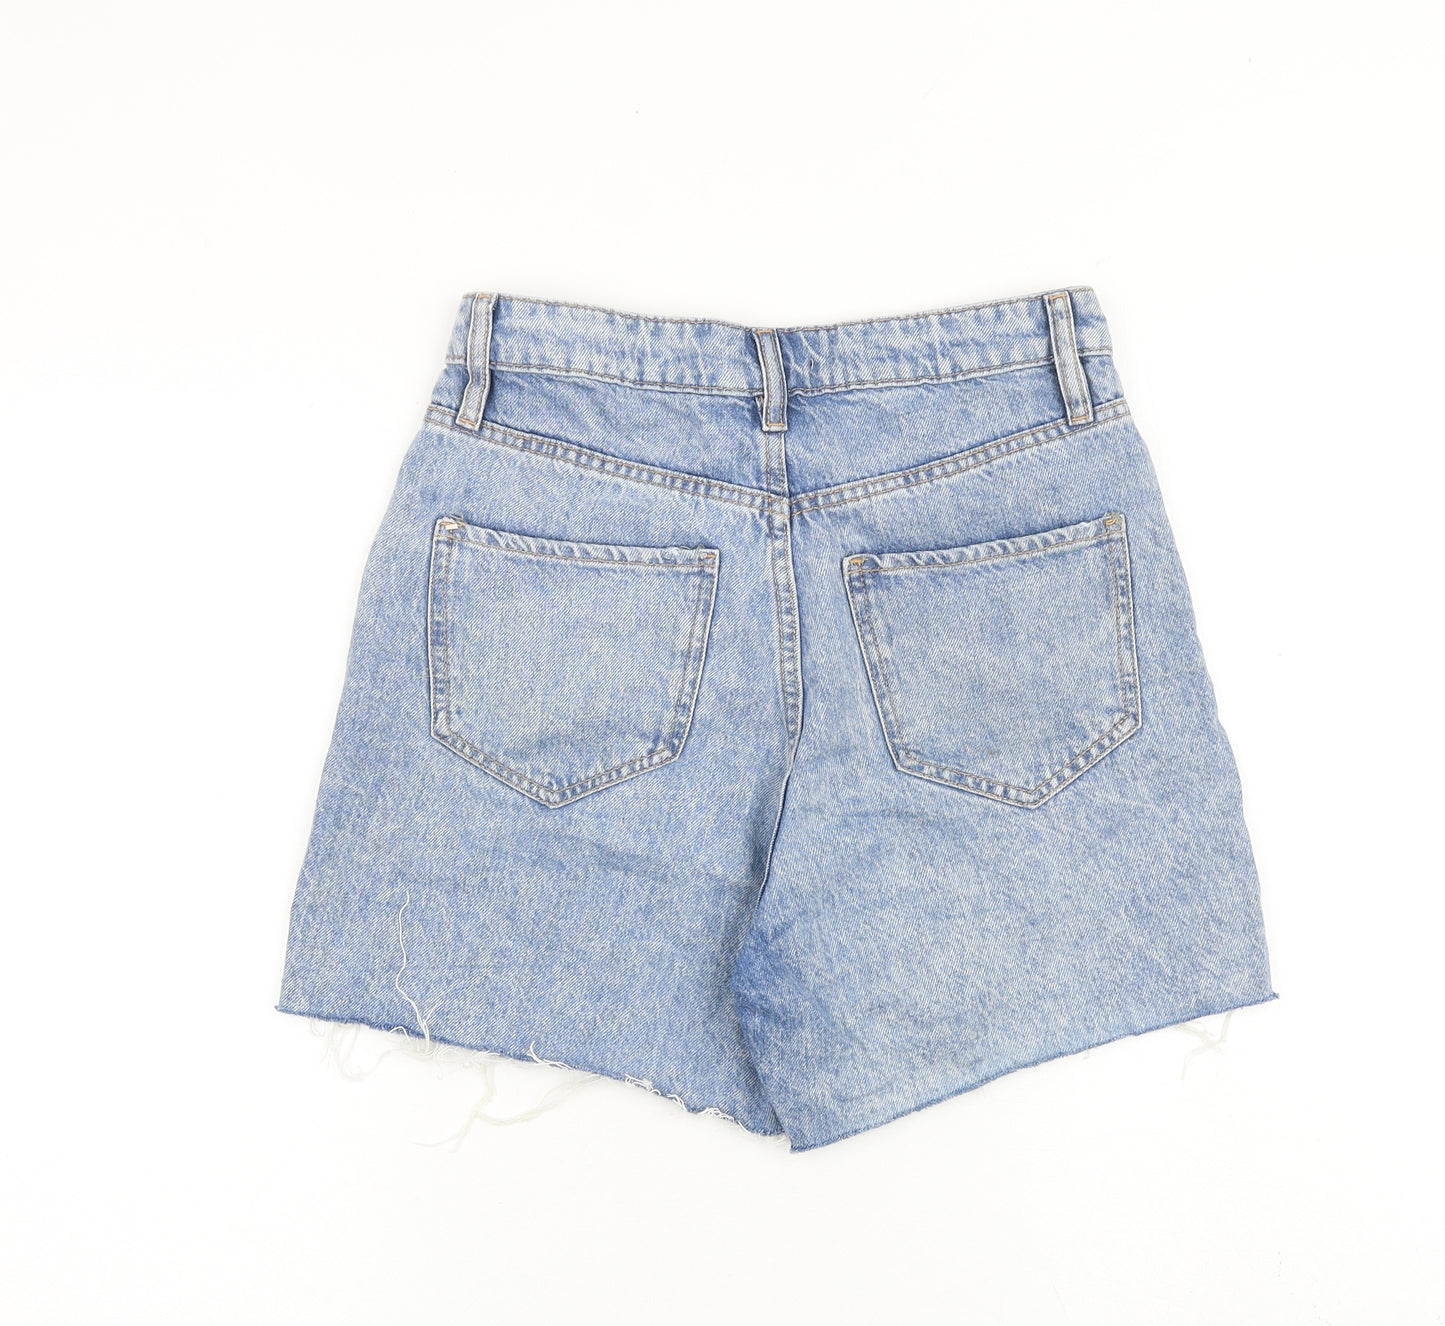 F&F Womens Blue 100% Cotton Mom Shorts Size 8 L4 in Regular Zip - Distressed